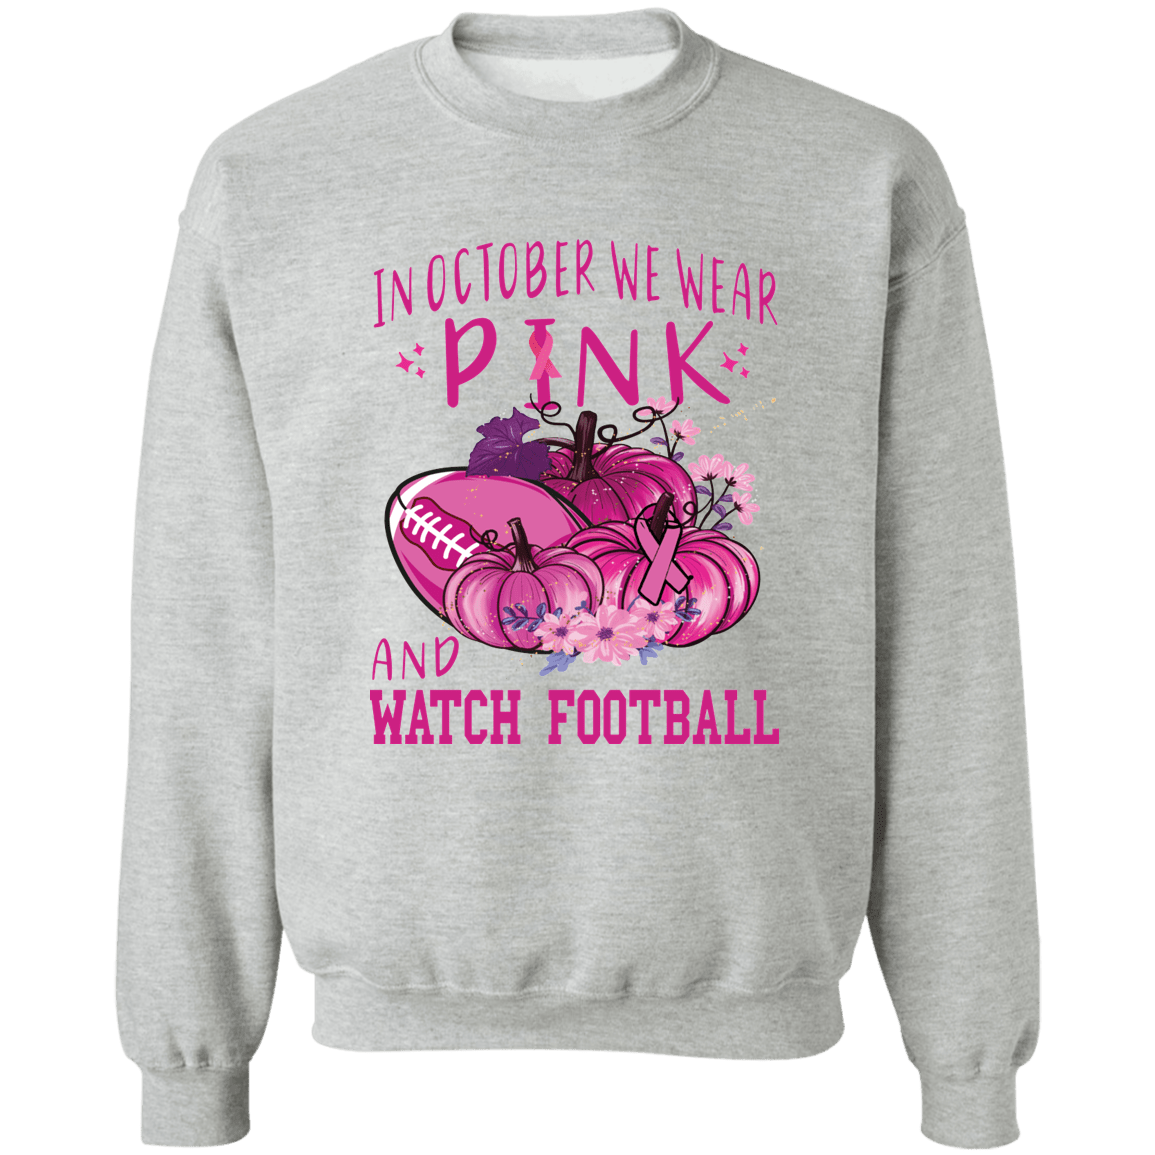 Wear Pink & Watch Football Unisex Crewneck Pullover Sweatshirt